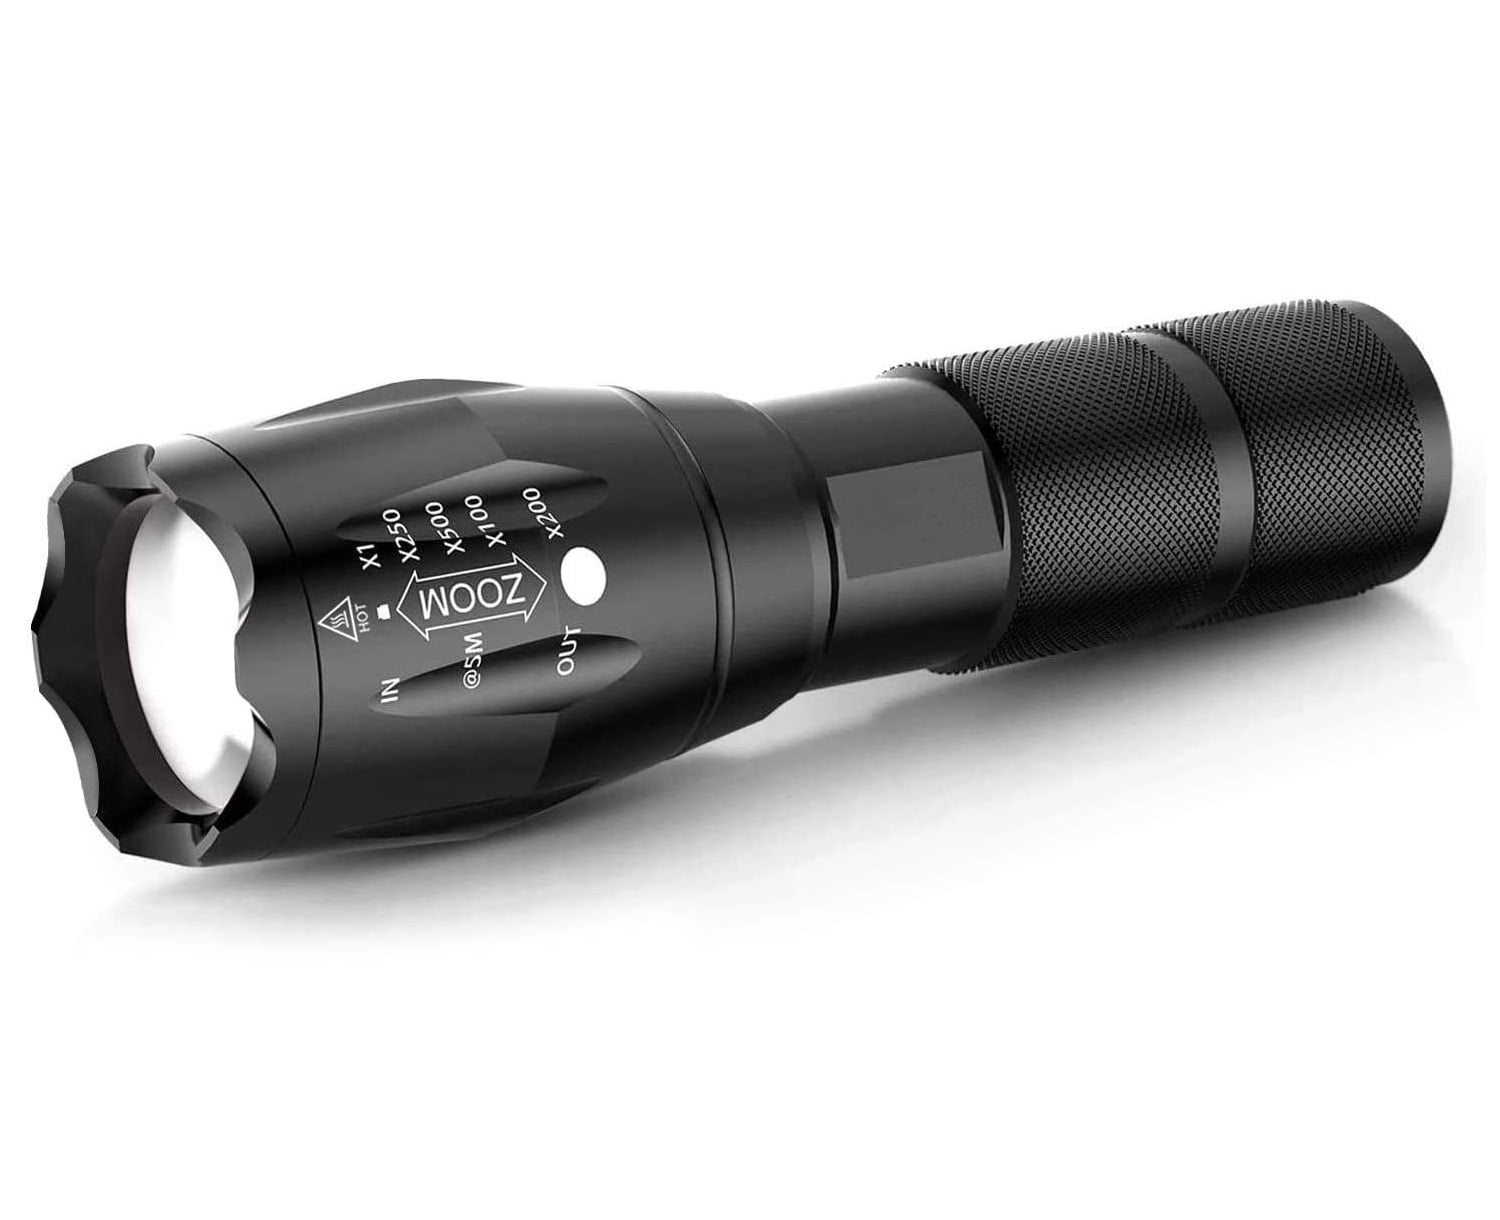 Zoomable 3000 Lumens XML T6 LED Flashlight Focus Torch Aluminum Lamp 18650